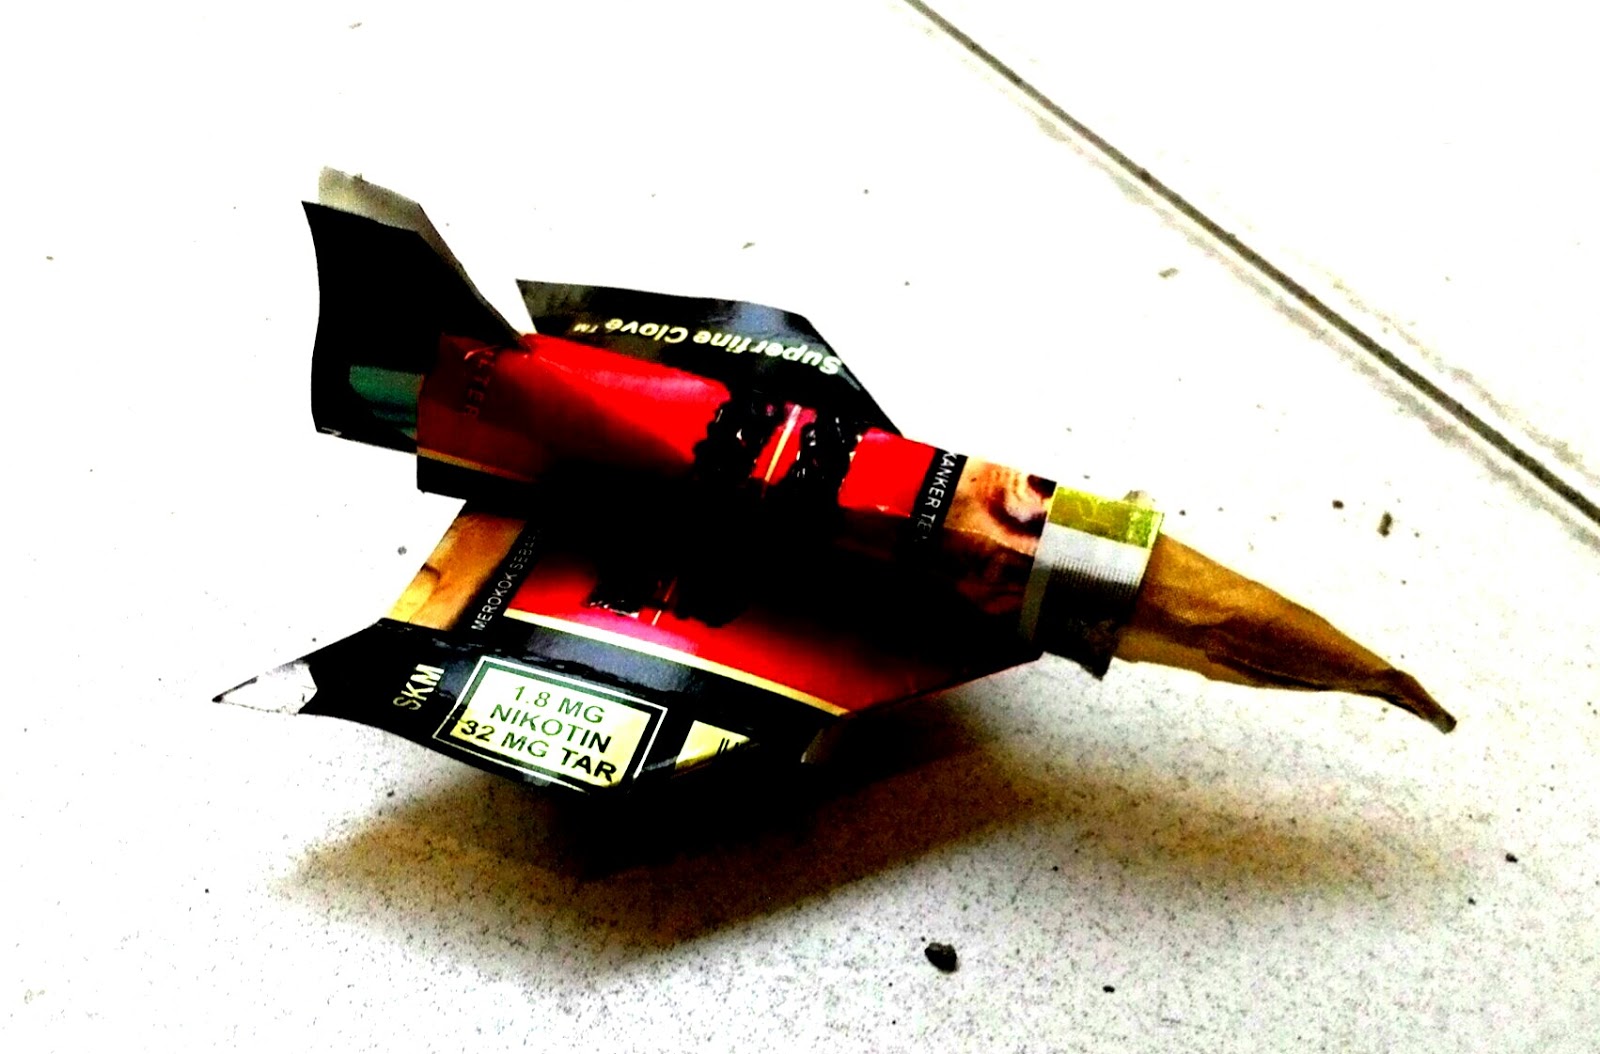 Handicraft : Membuat Pesawat Dengan Bekas Bungkus Rokok